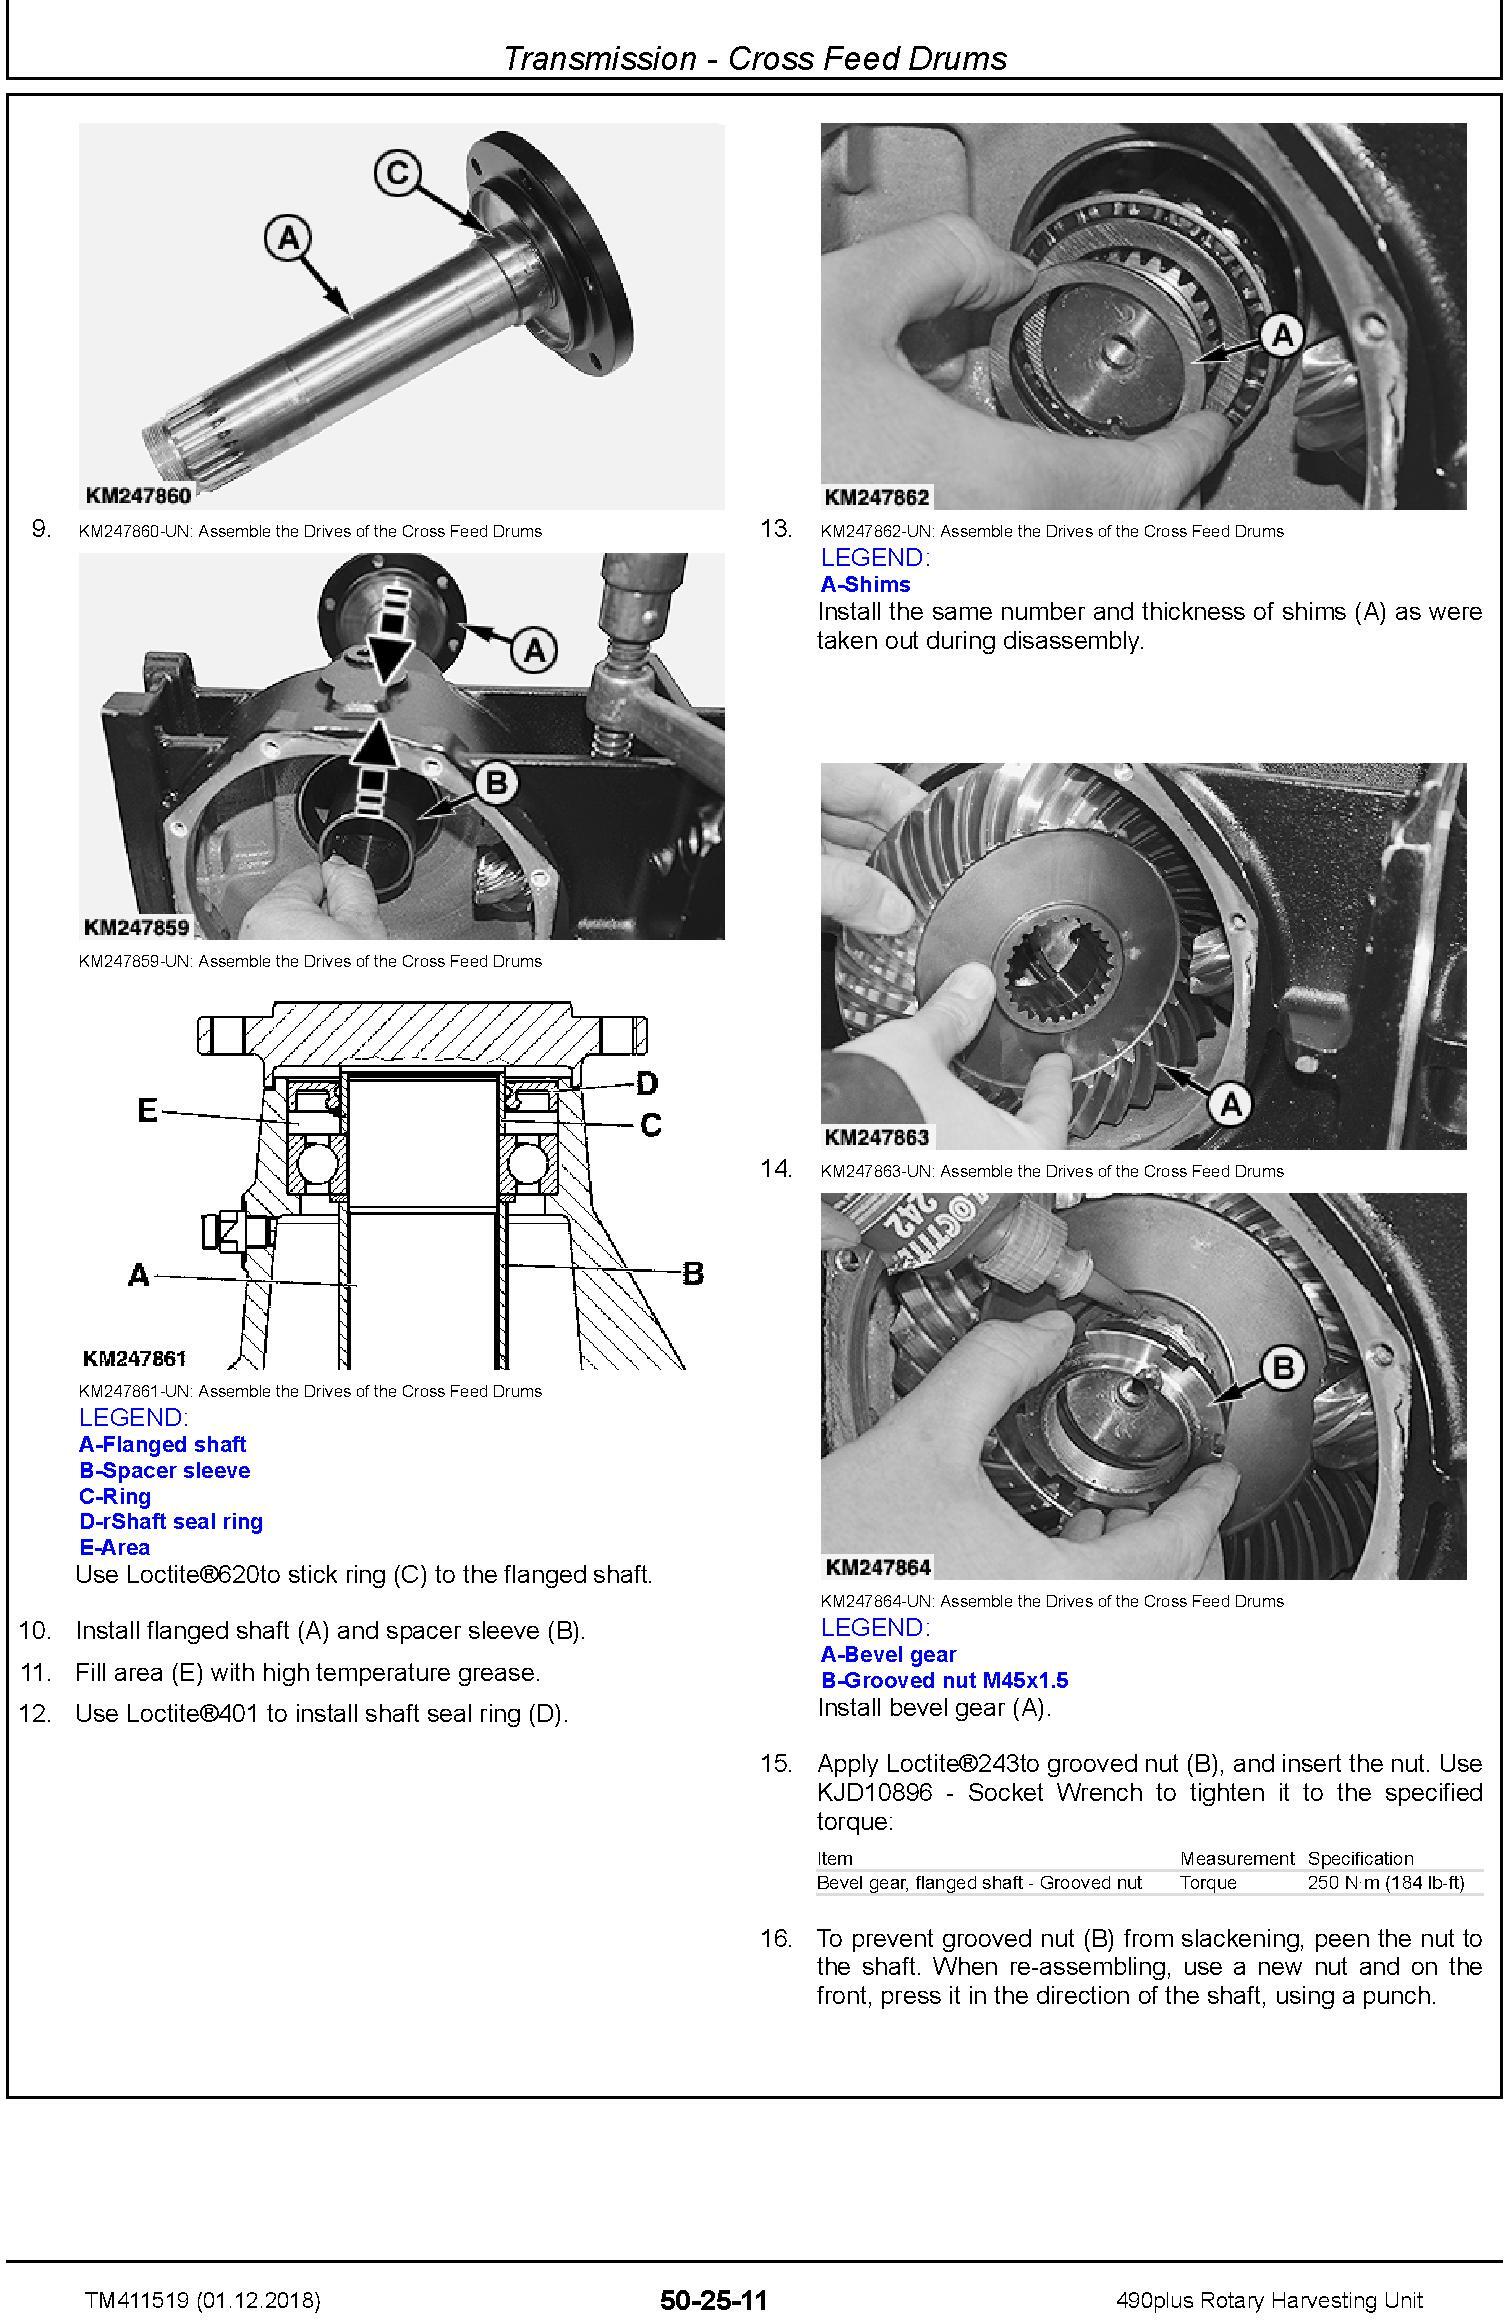 John Deere 490plus Rotary Harvesting Unit Technical Manual (TM411519) - 3